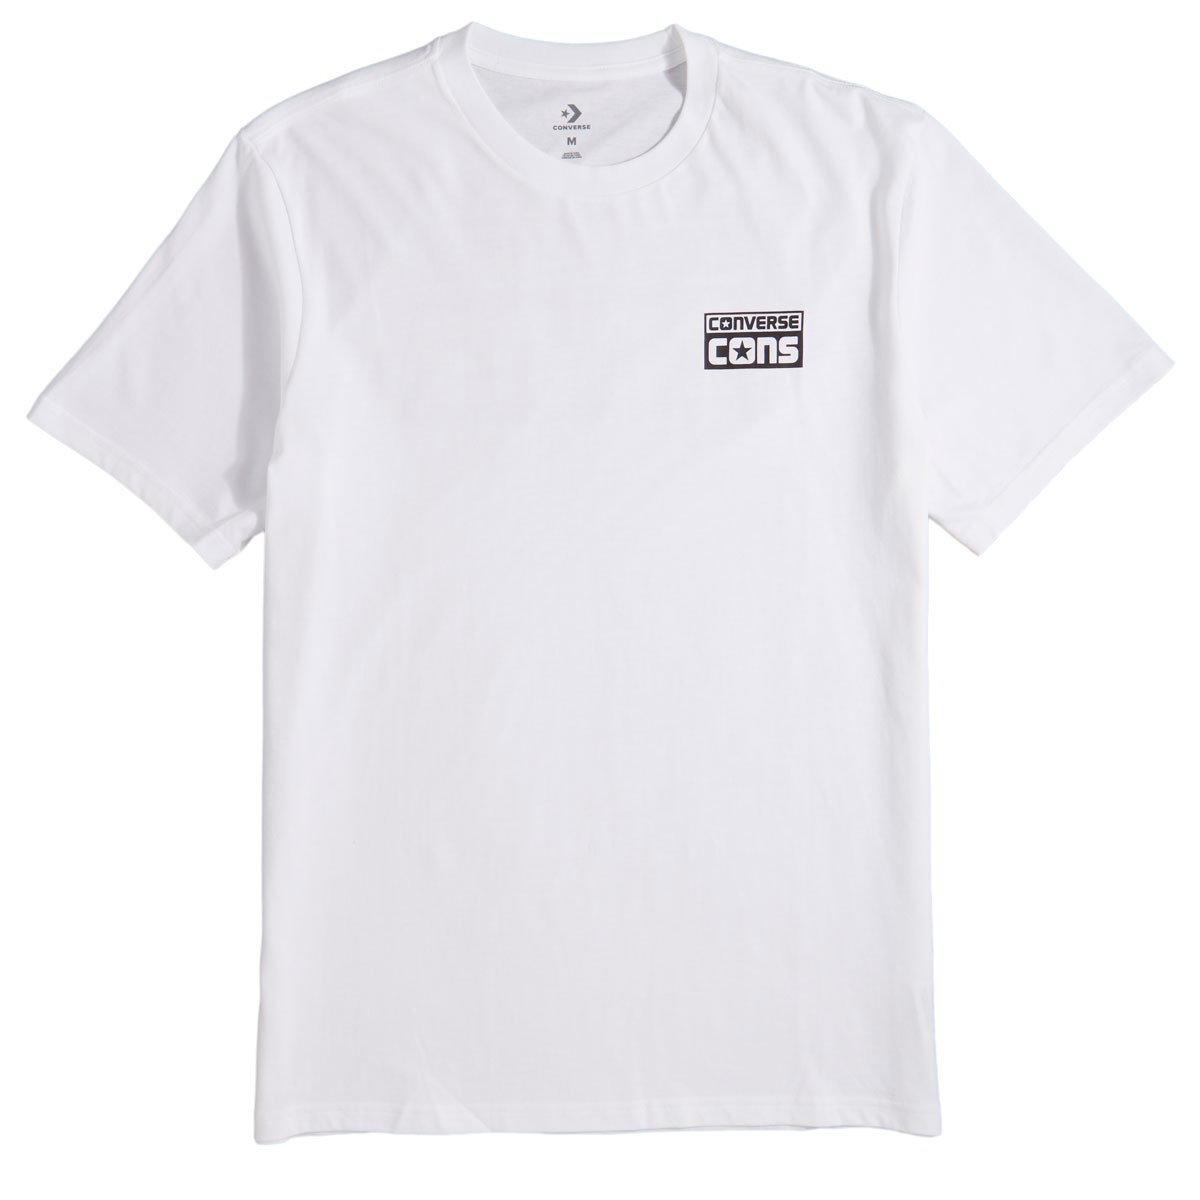 Converse Cons Logo T-Shirt White 